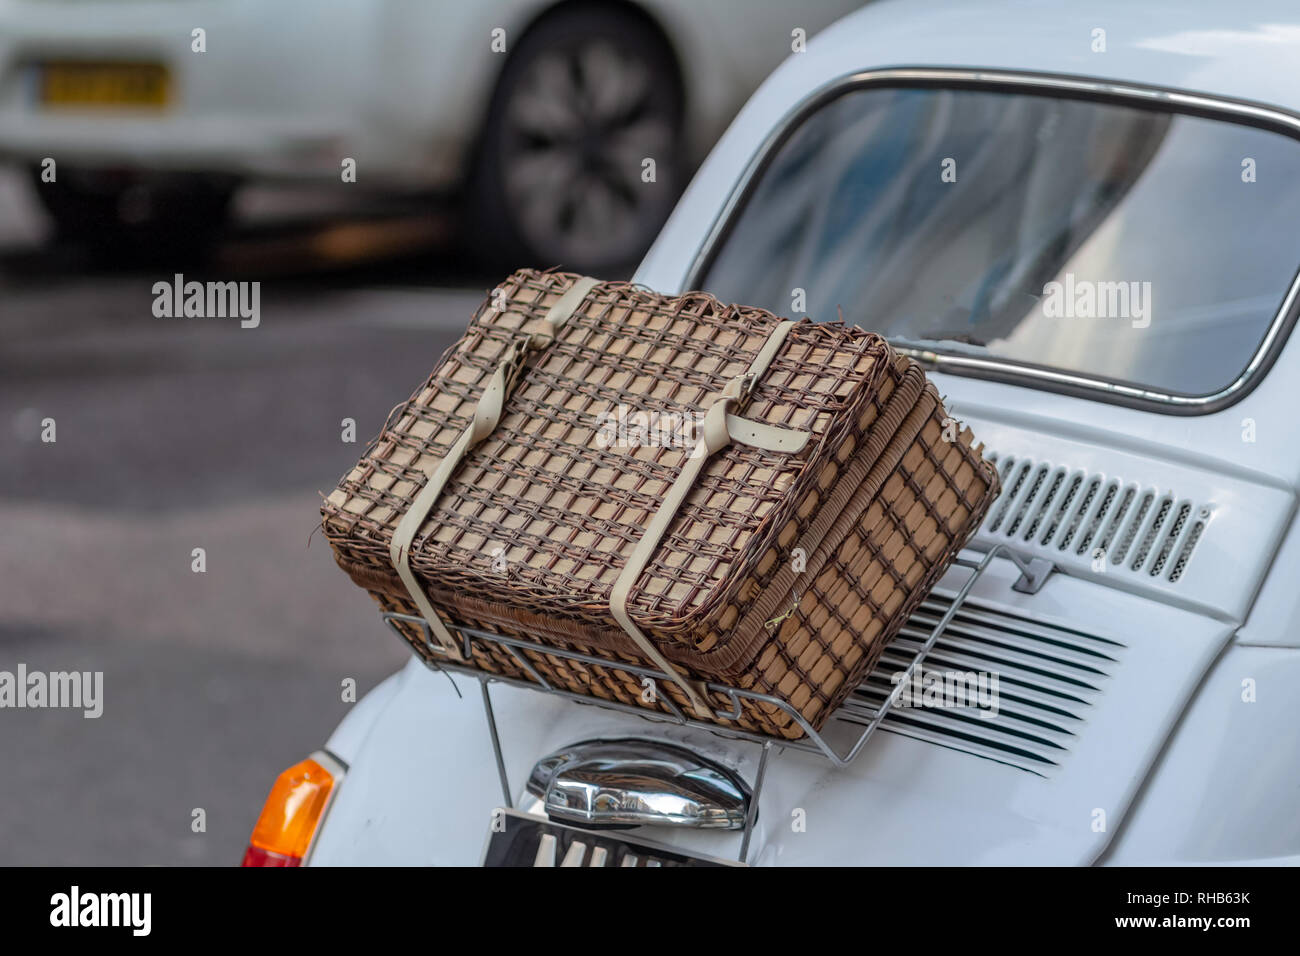 Handmade wicker picnic basket over white car boot Stock Photo